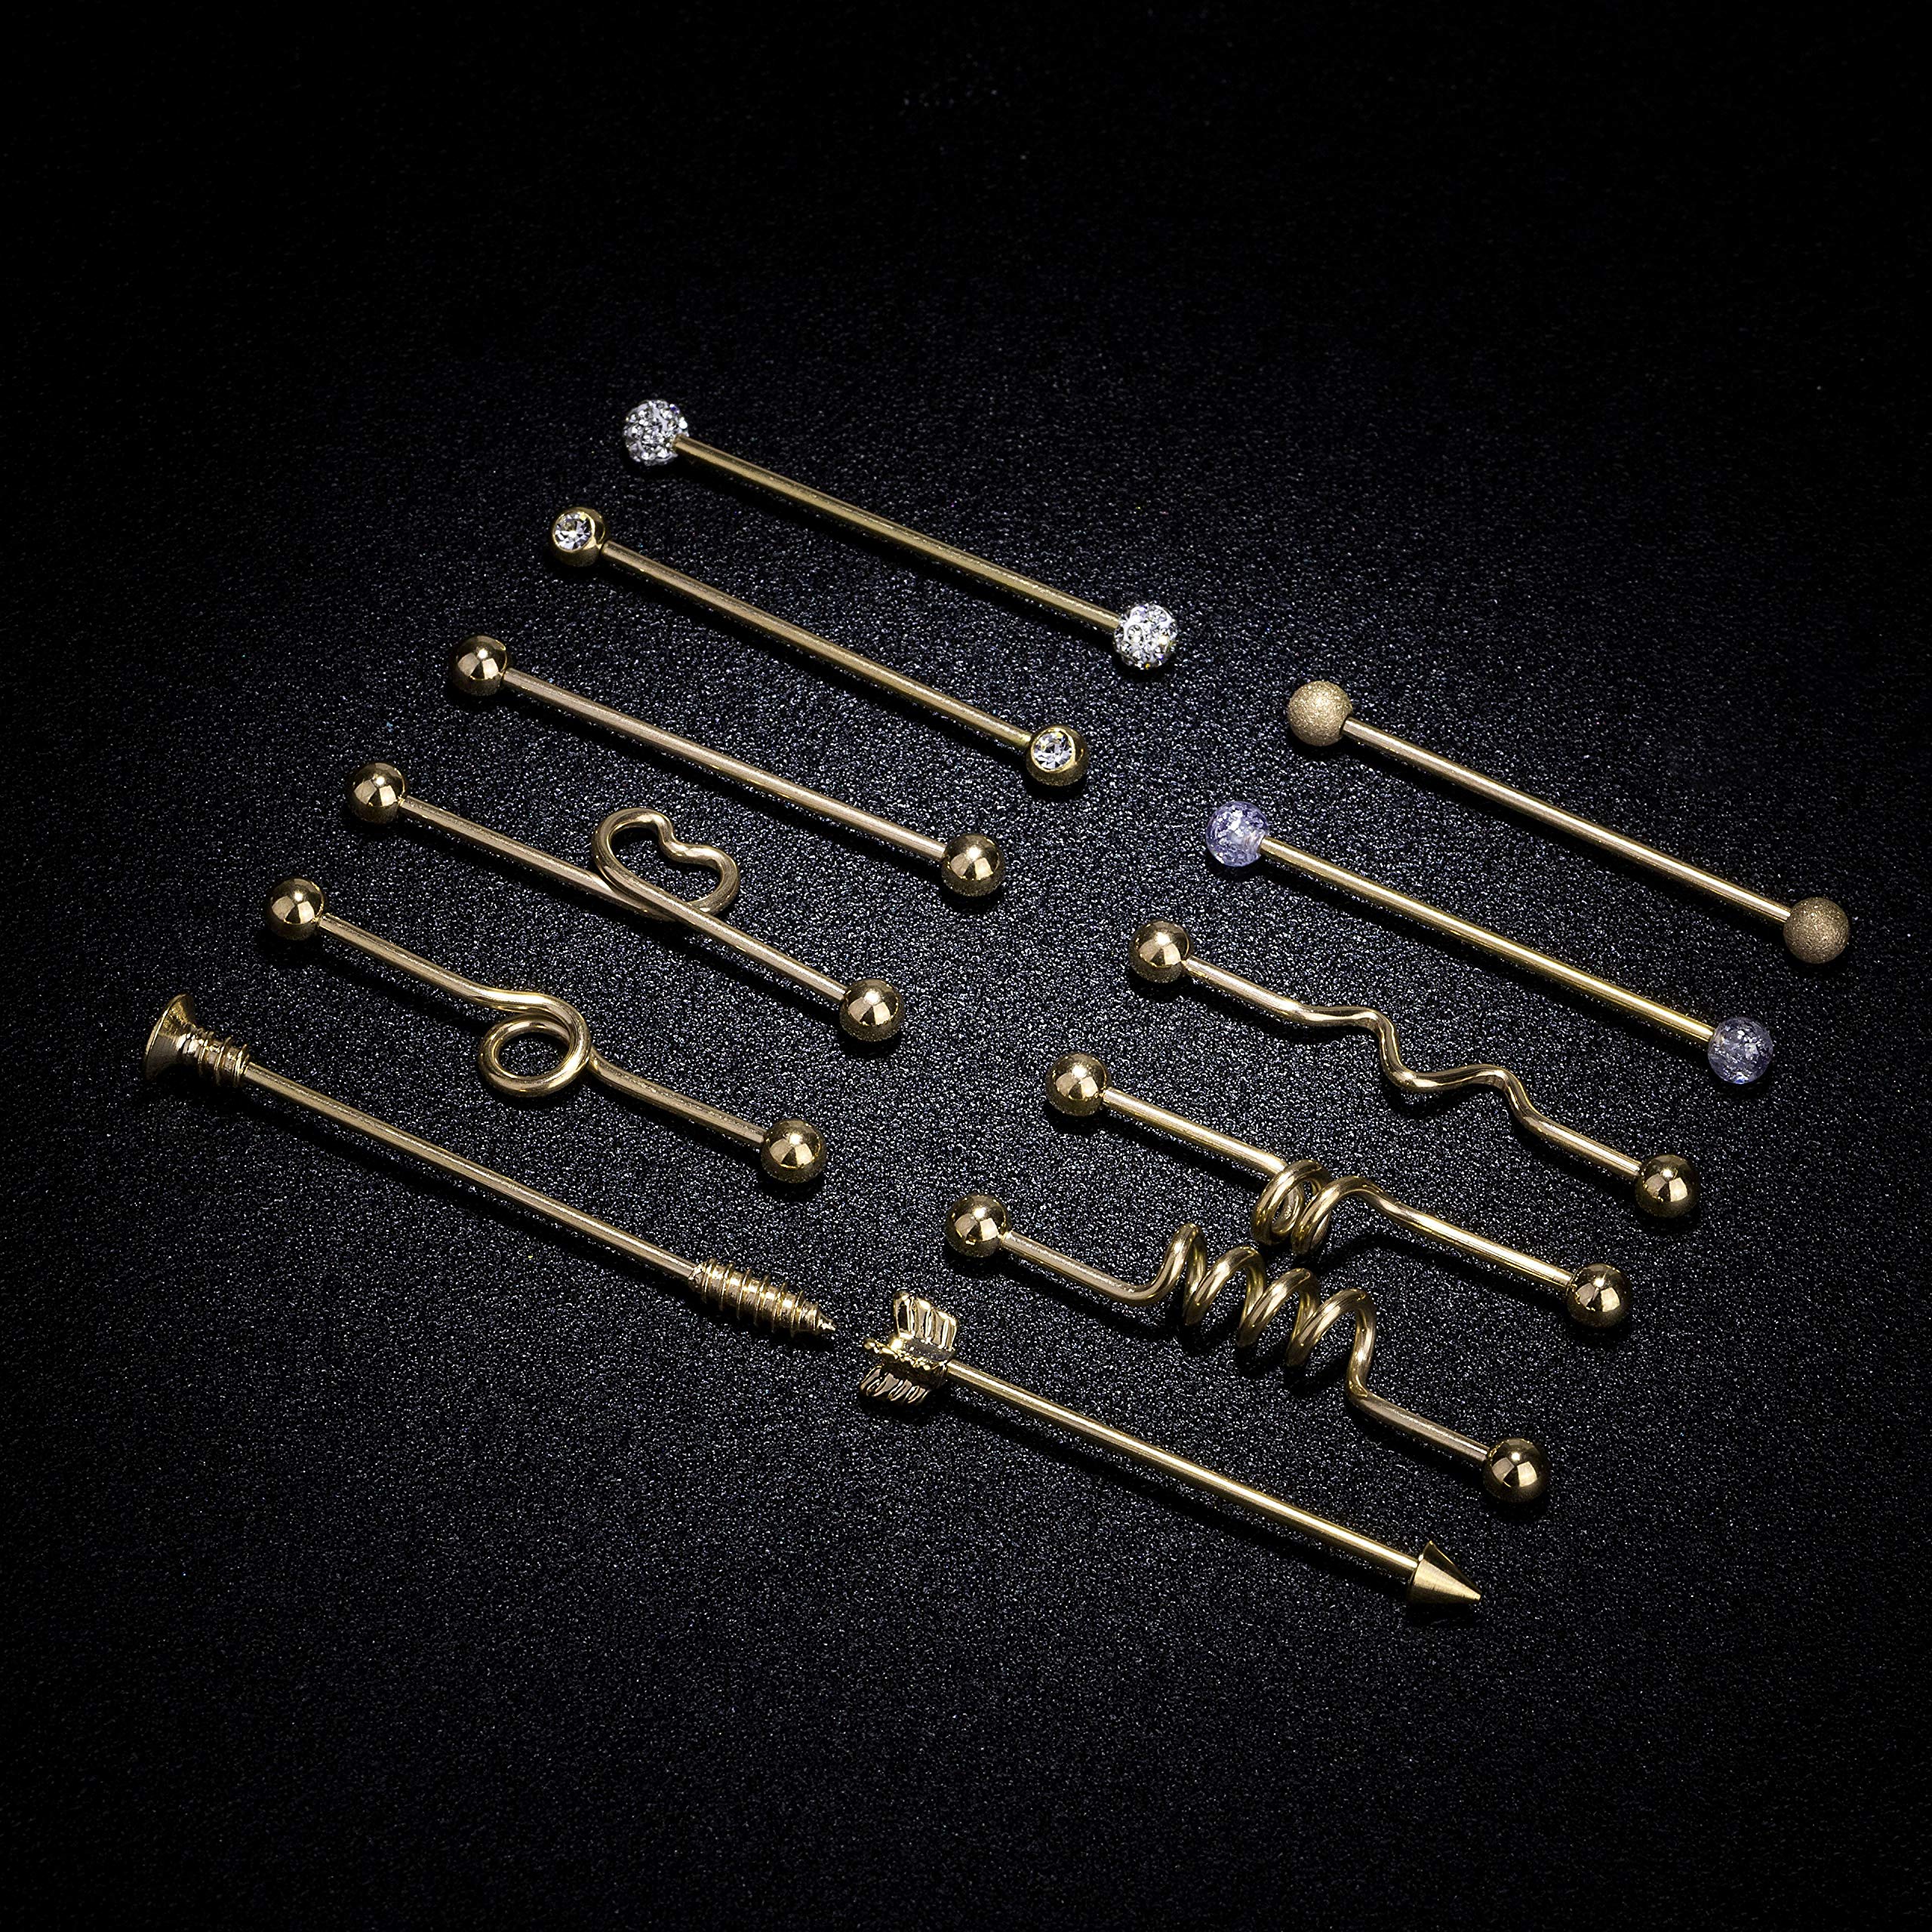 Masedy 12Pcs 14G 316L Stainless Steel Industrial Barbell Earrings for Women Men Cartilage Helix Piercing Gold